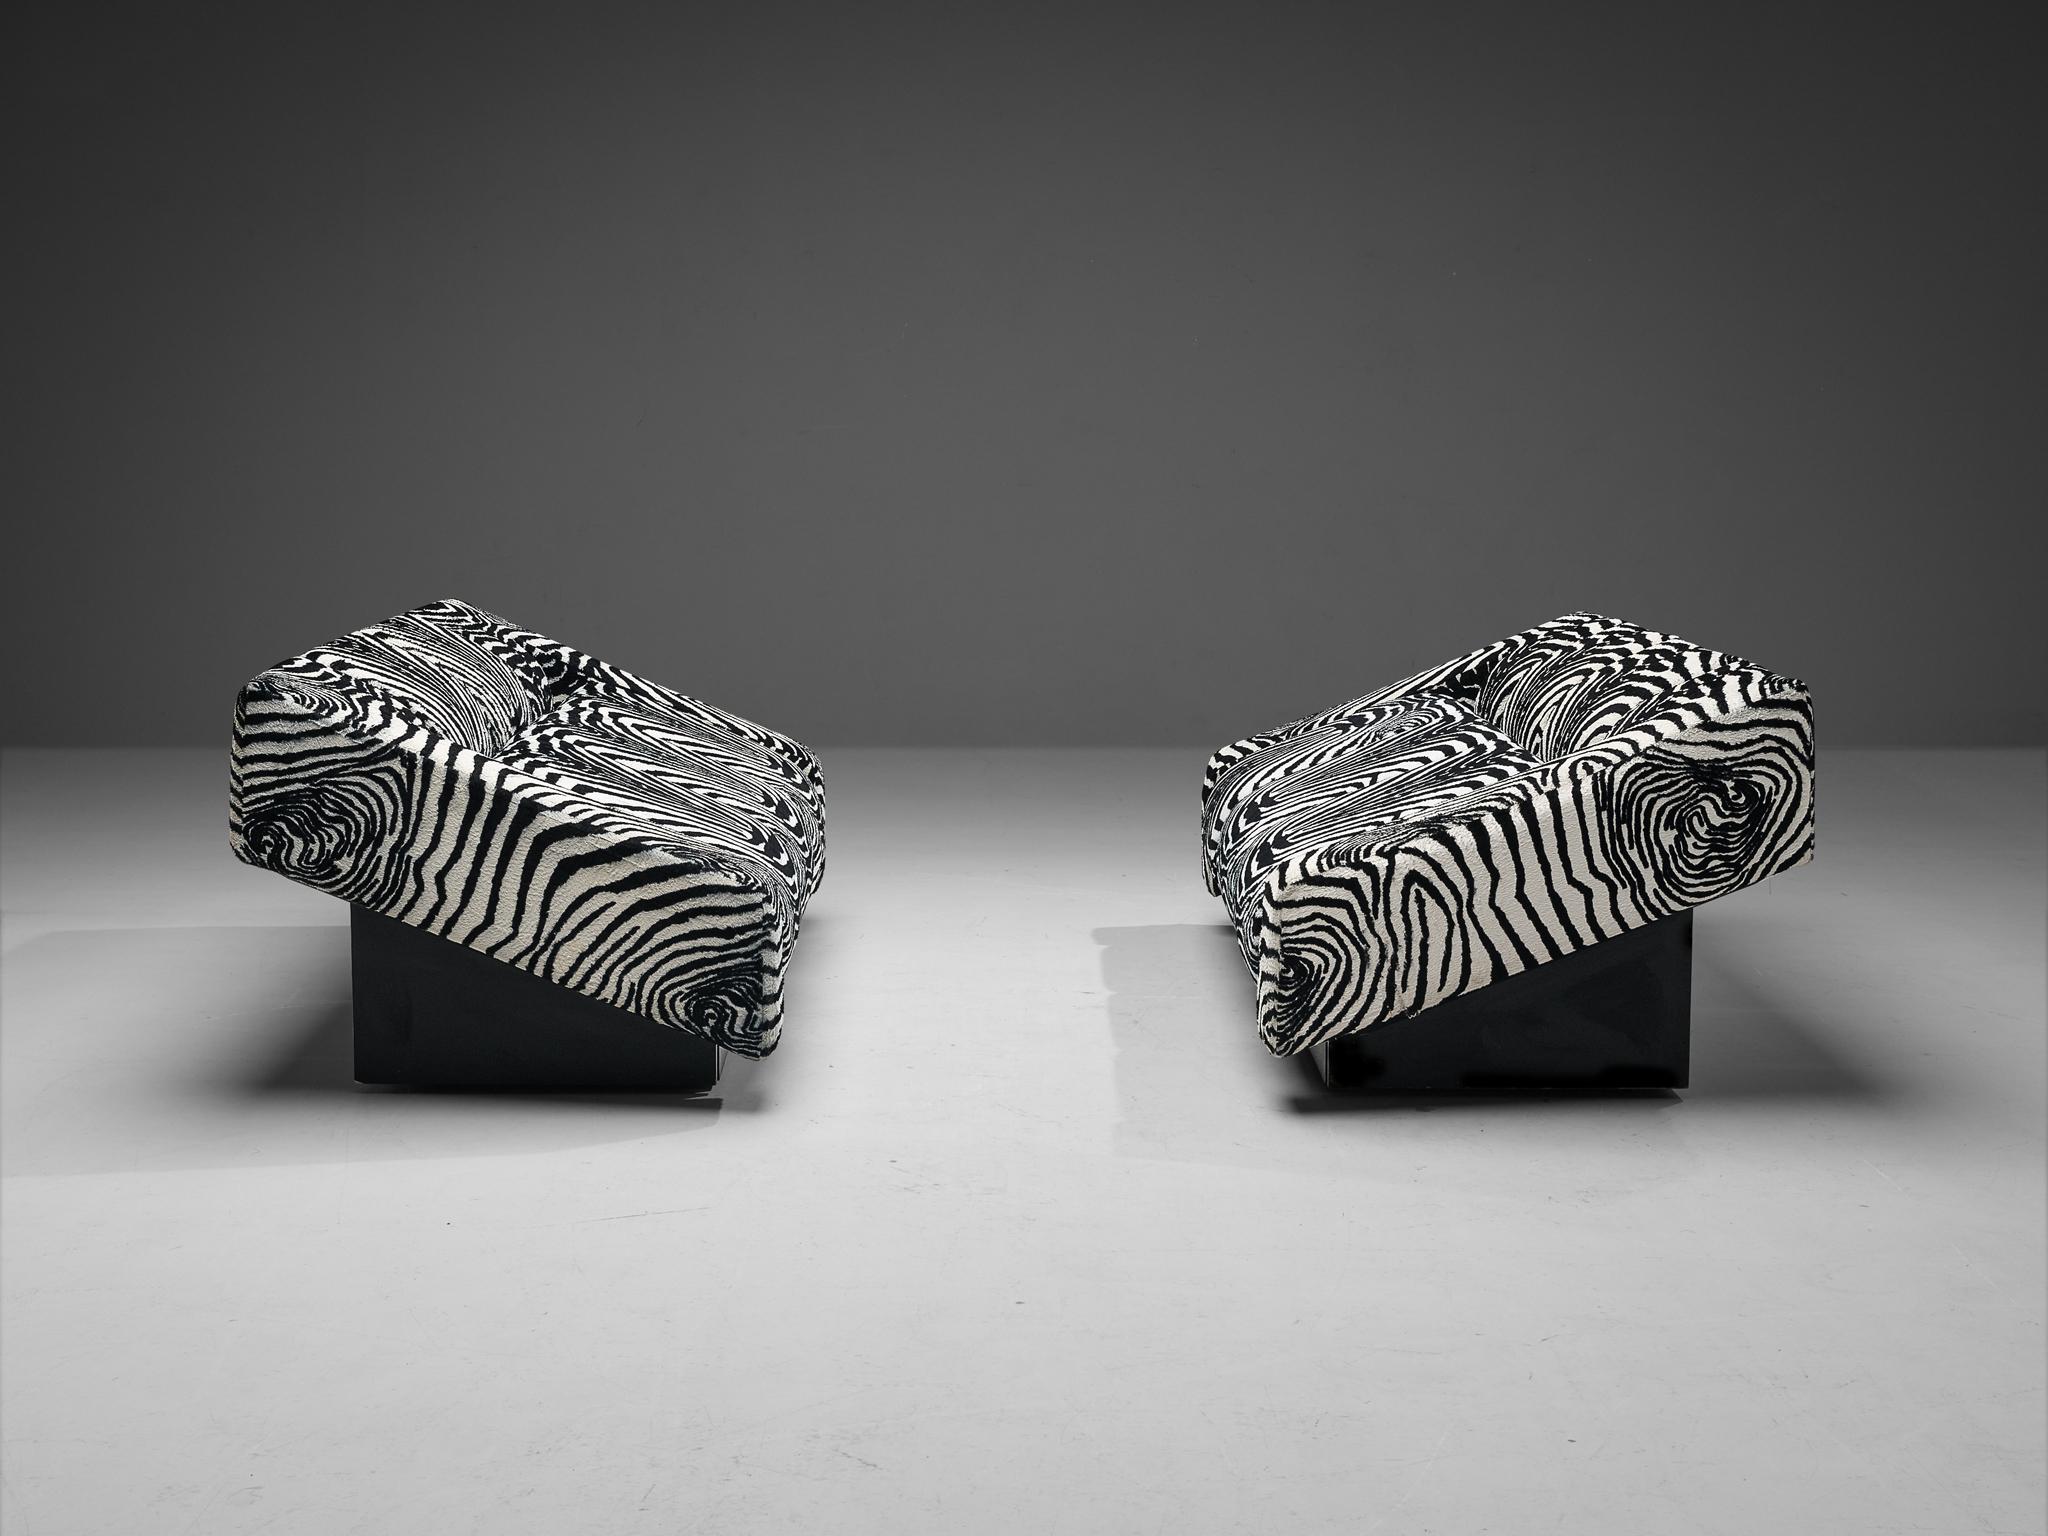 Fabric Mario Botta for Alias Pair of 'Obliqua' Sofa's in Zebra Print Upholstery 